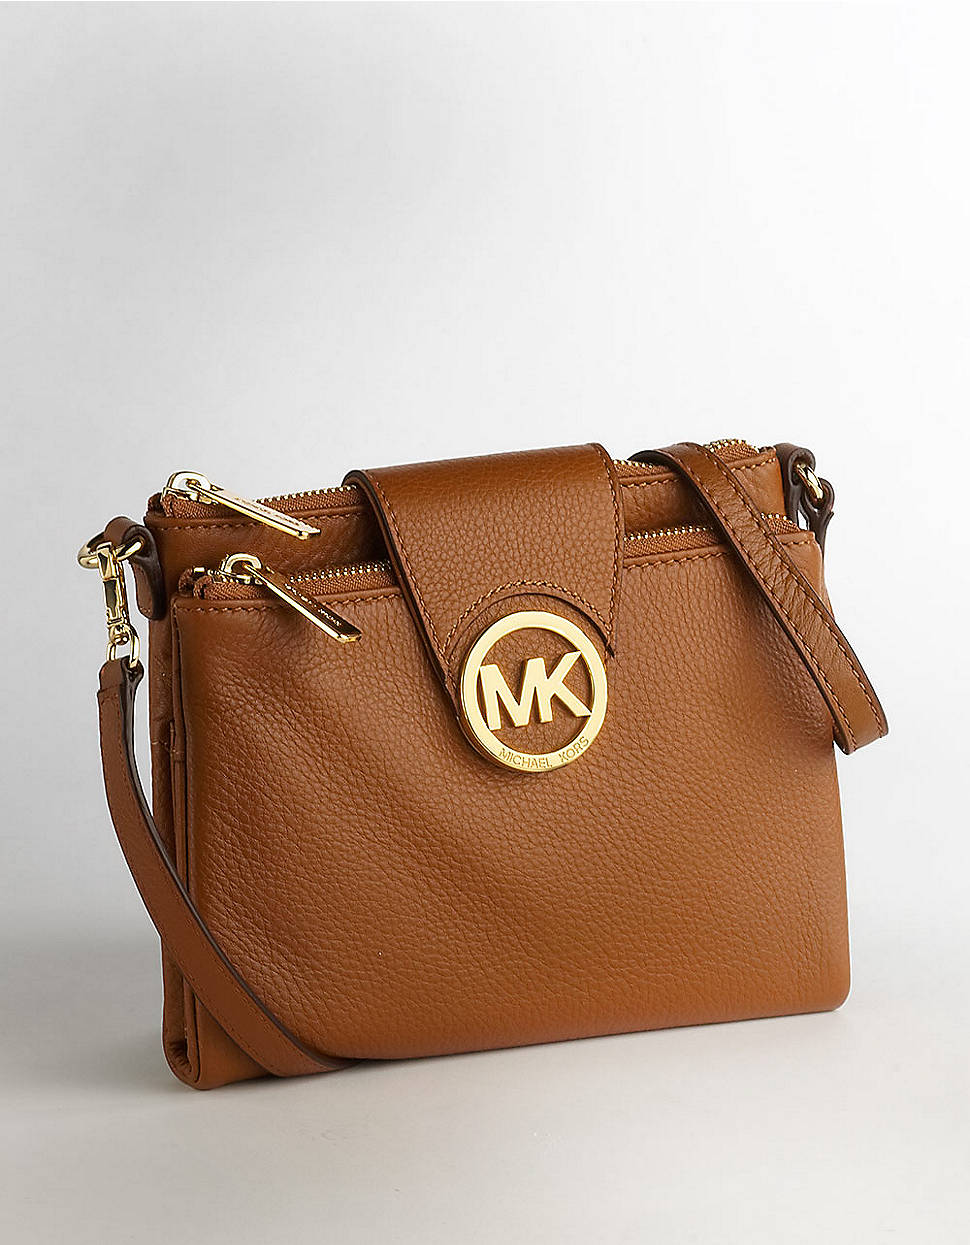 Michael Kors Brown Leather Purse Bag | semashow.com